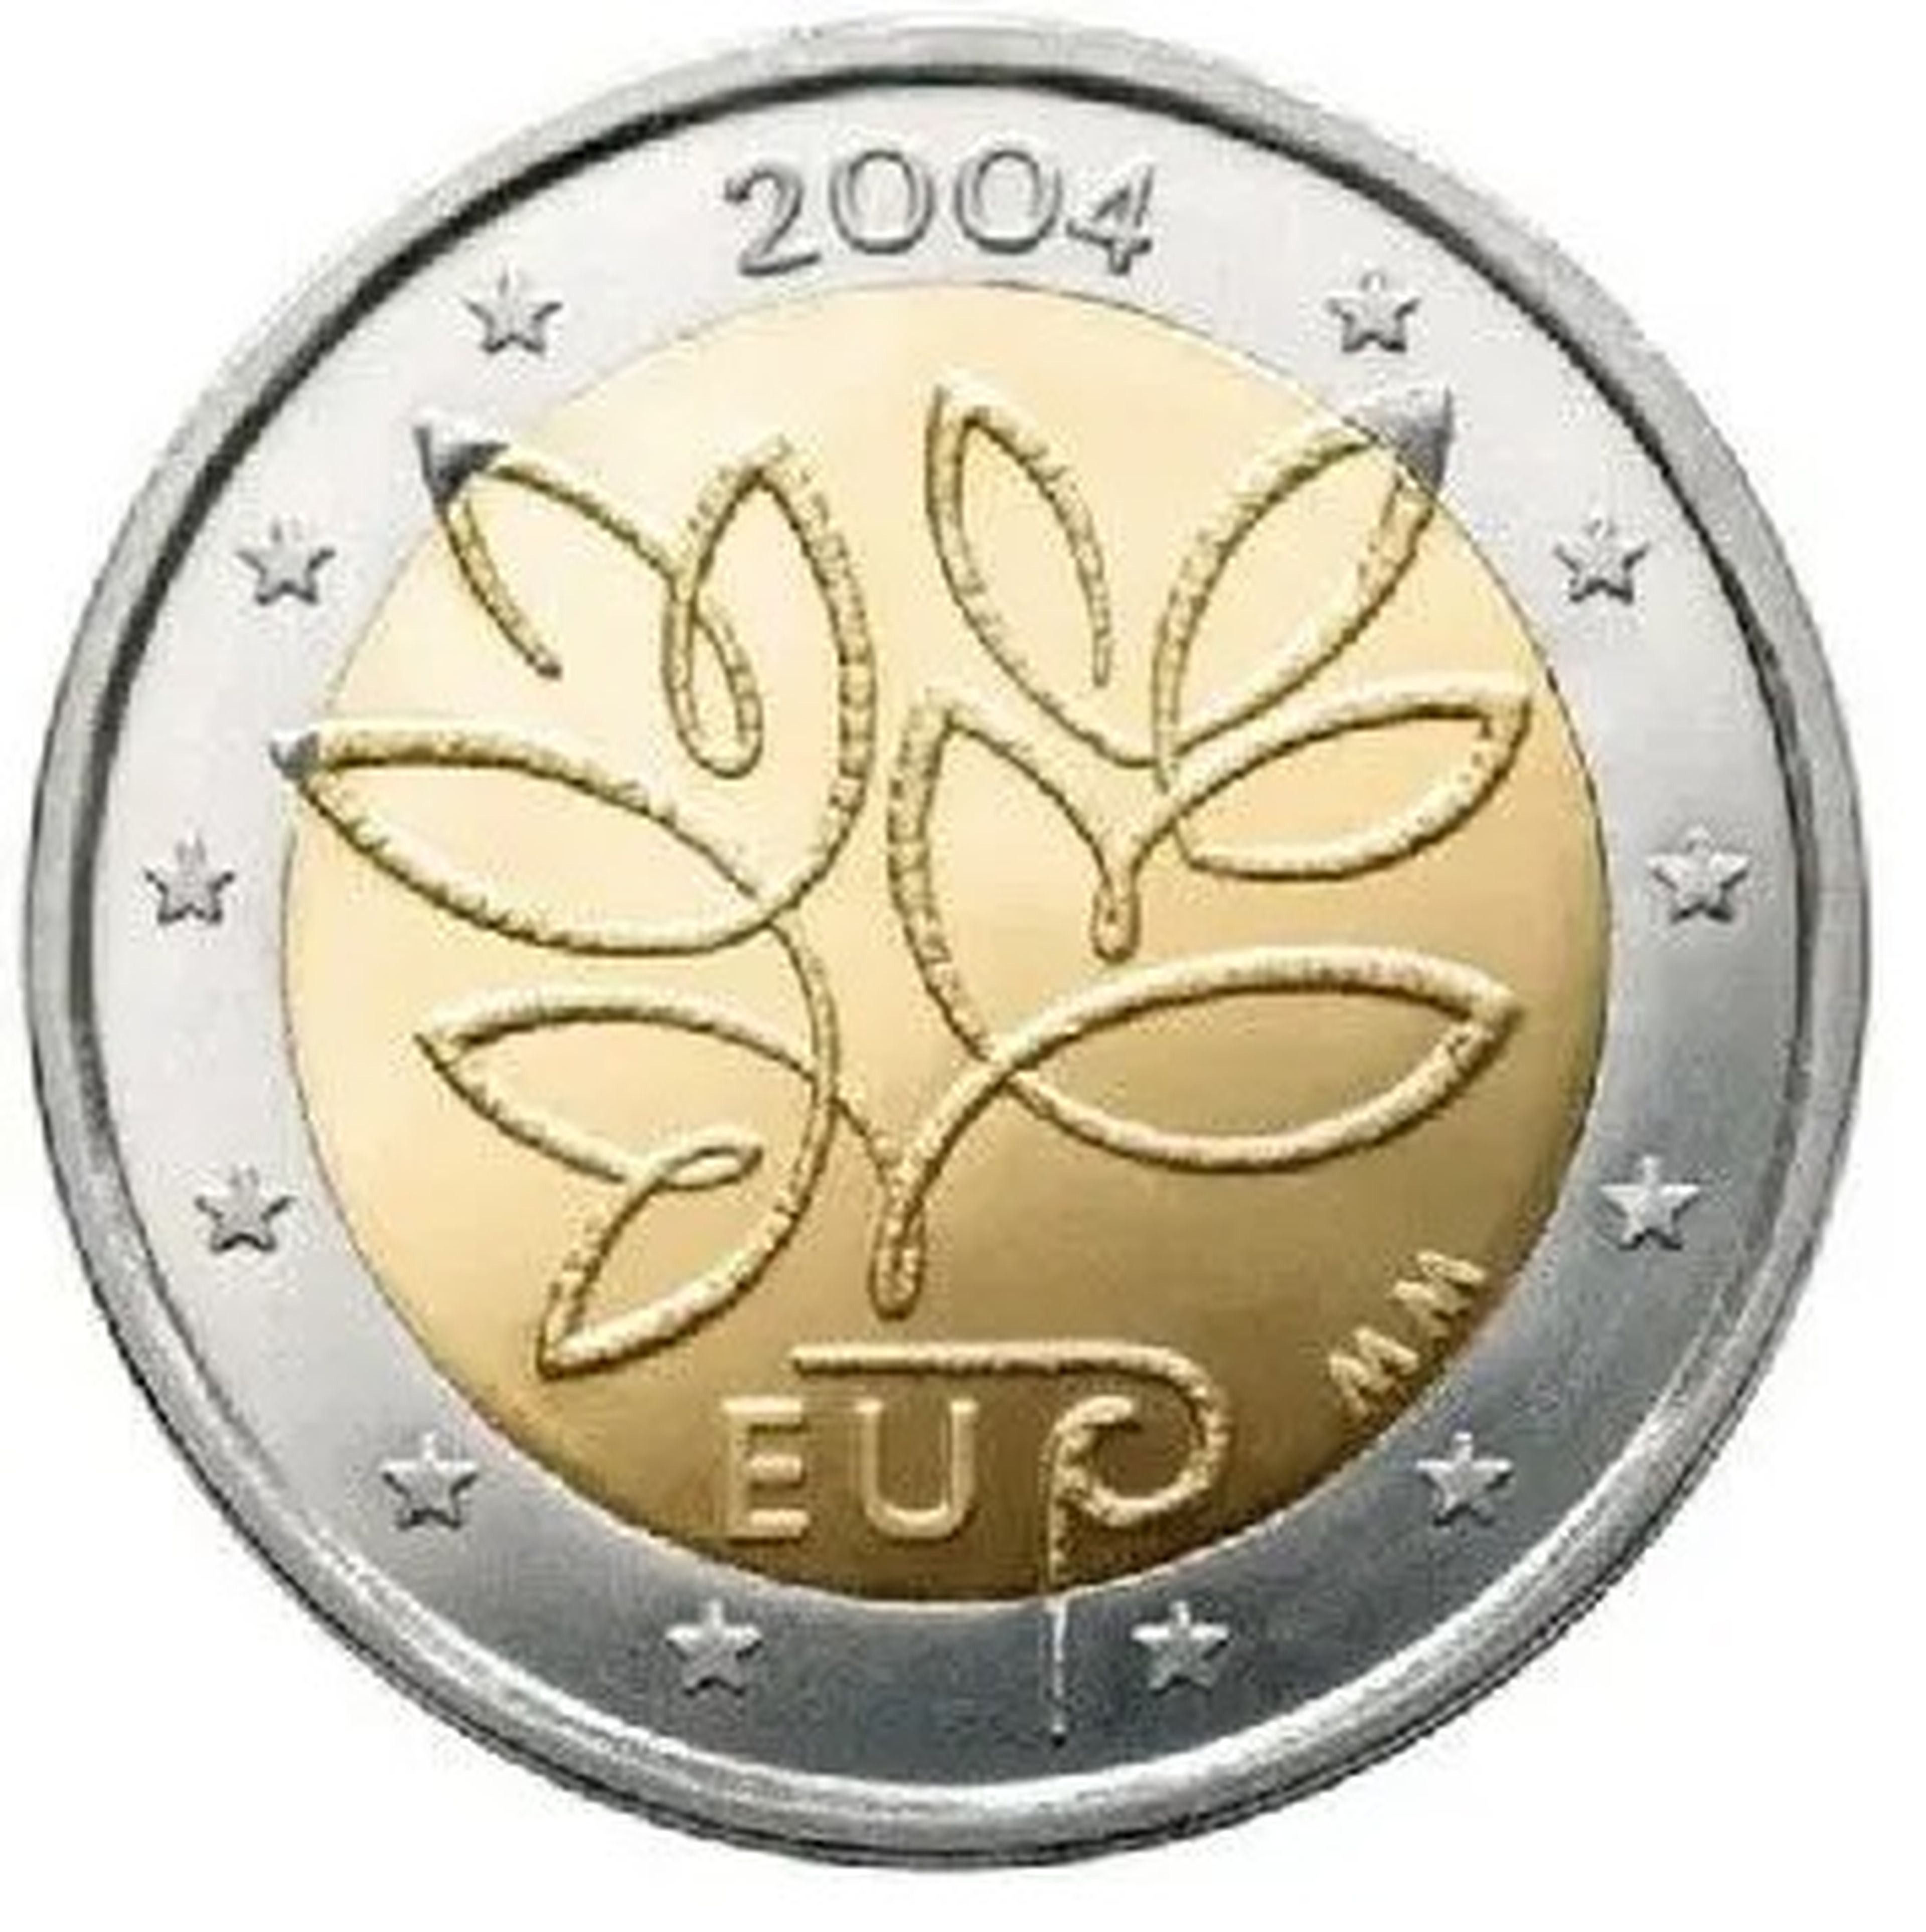 Moneda de 2 euros de Finlandia 2004